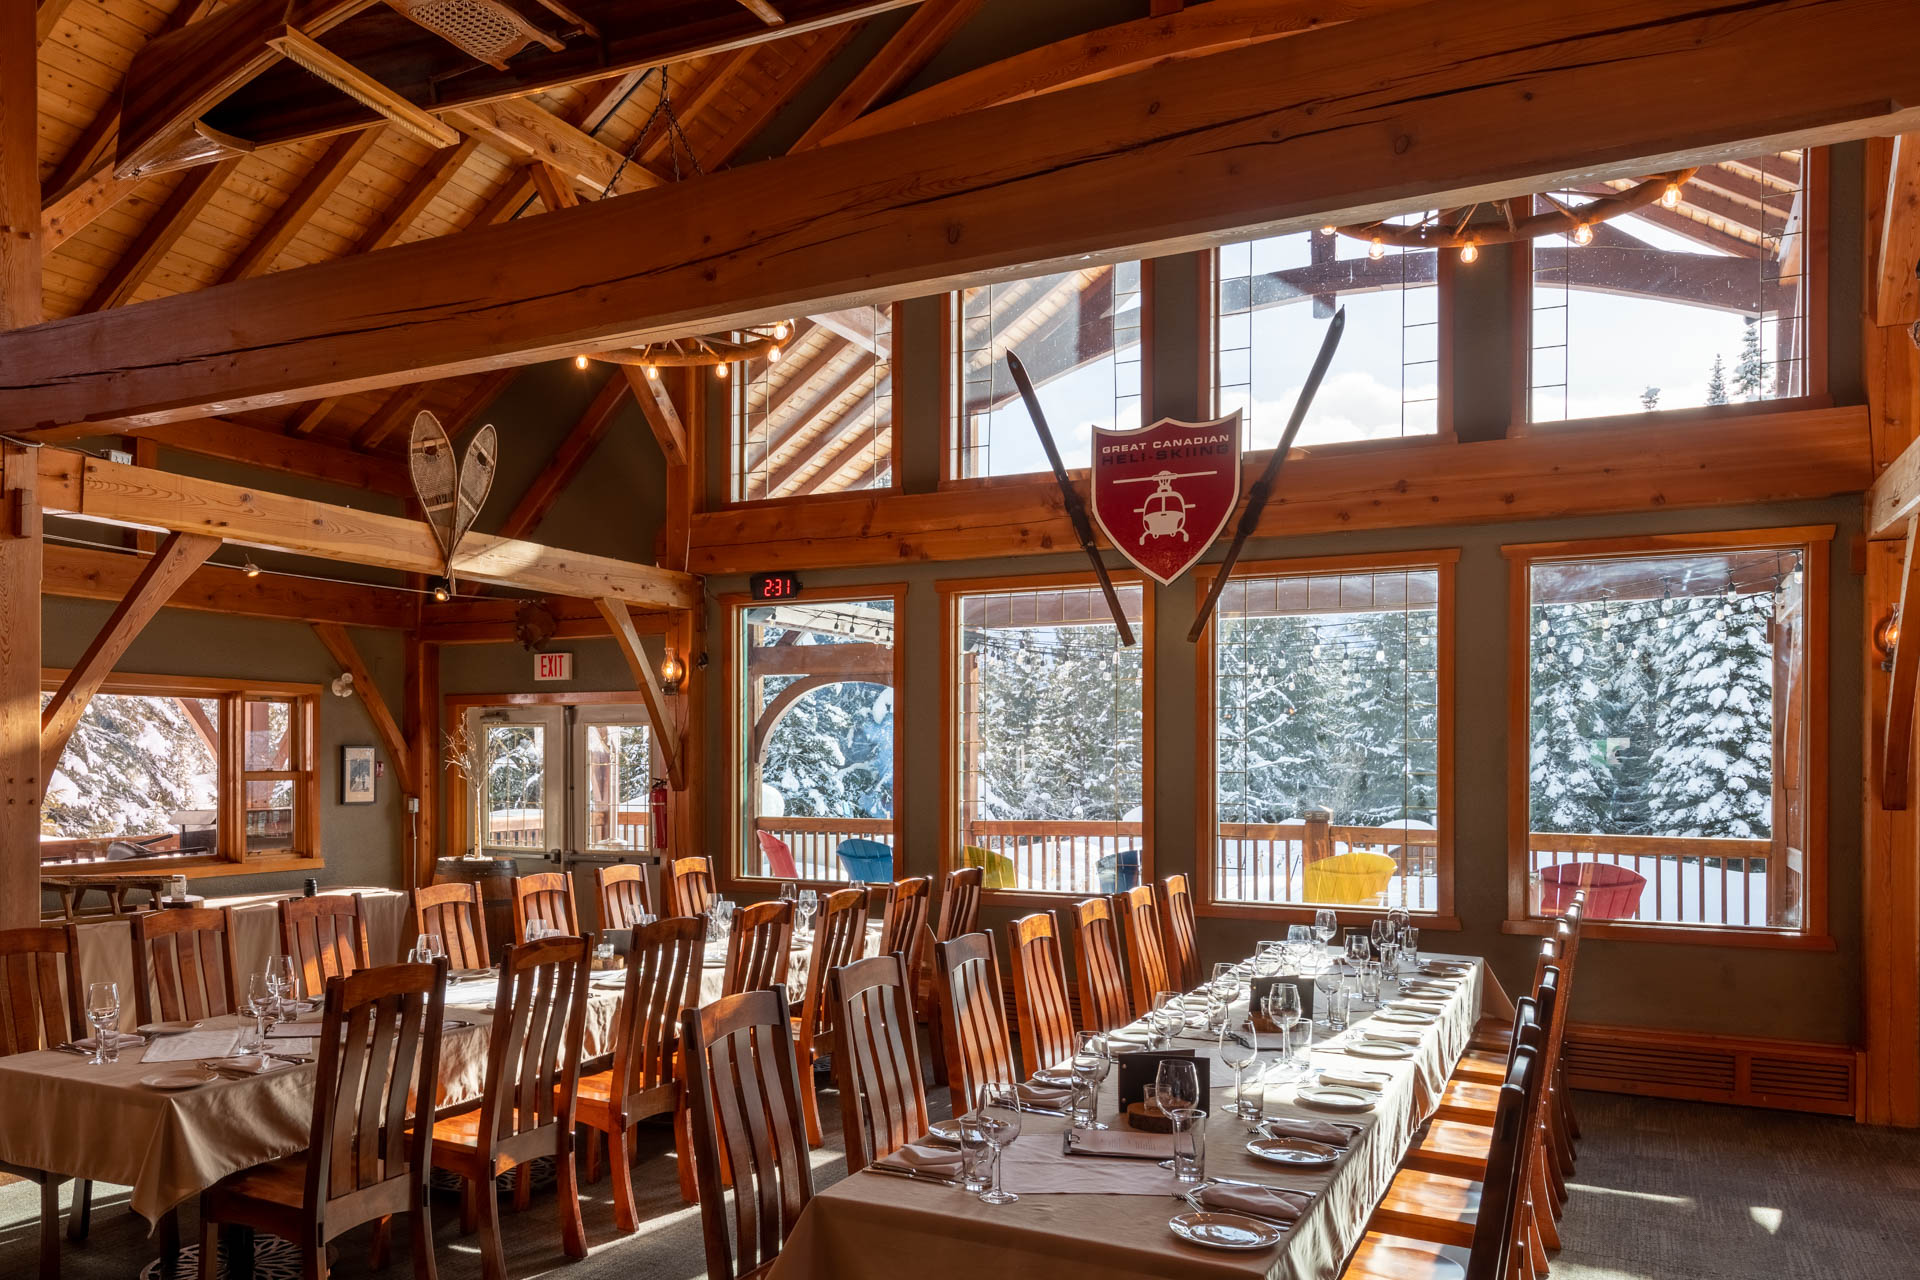 Heli ski lodge dining room with winter setting